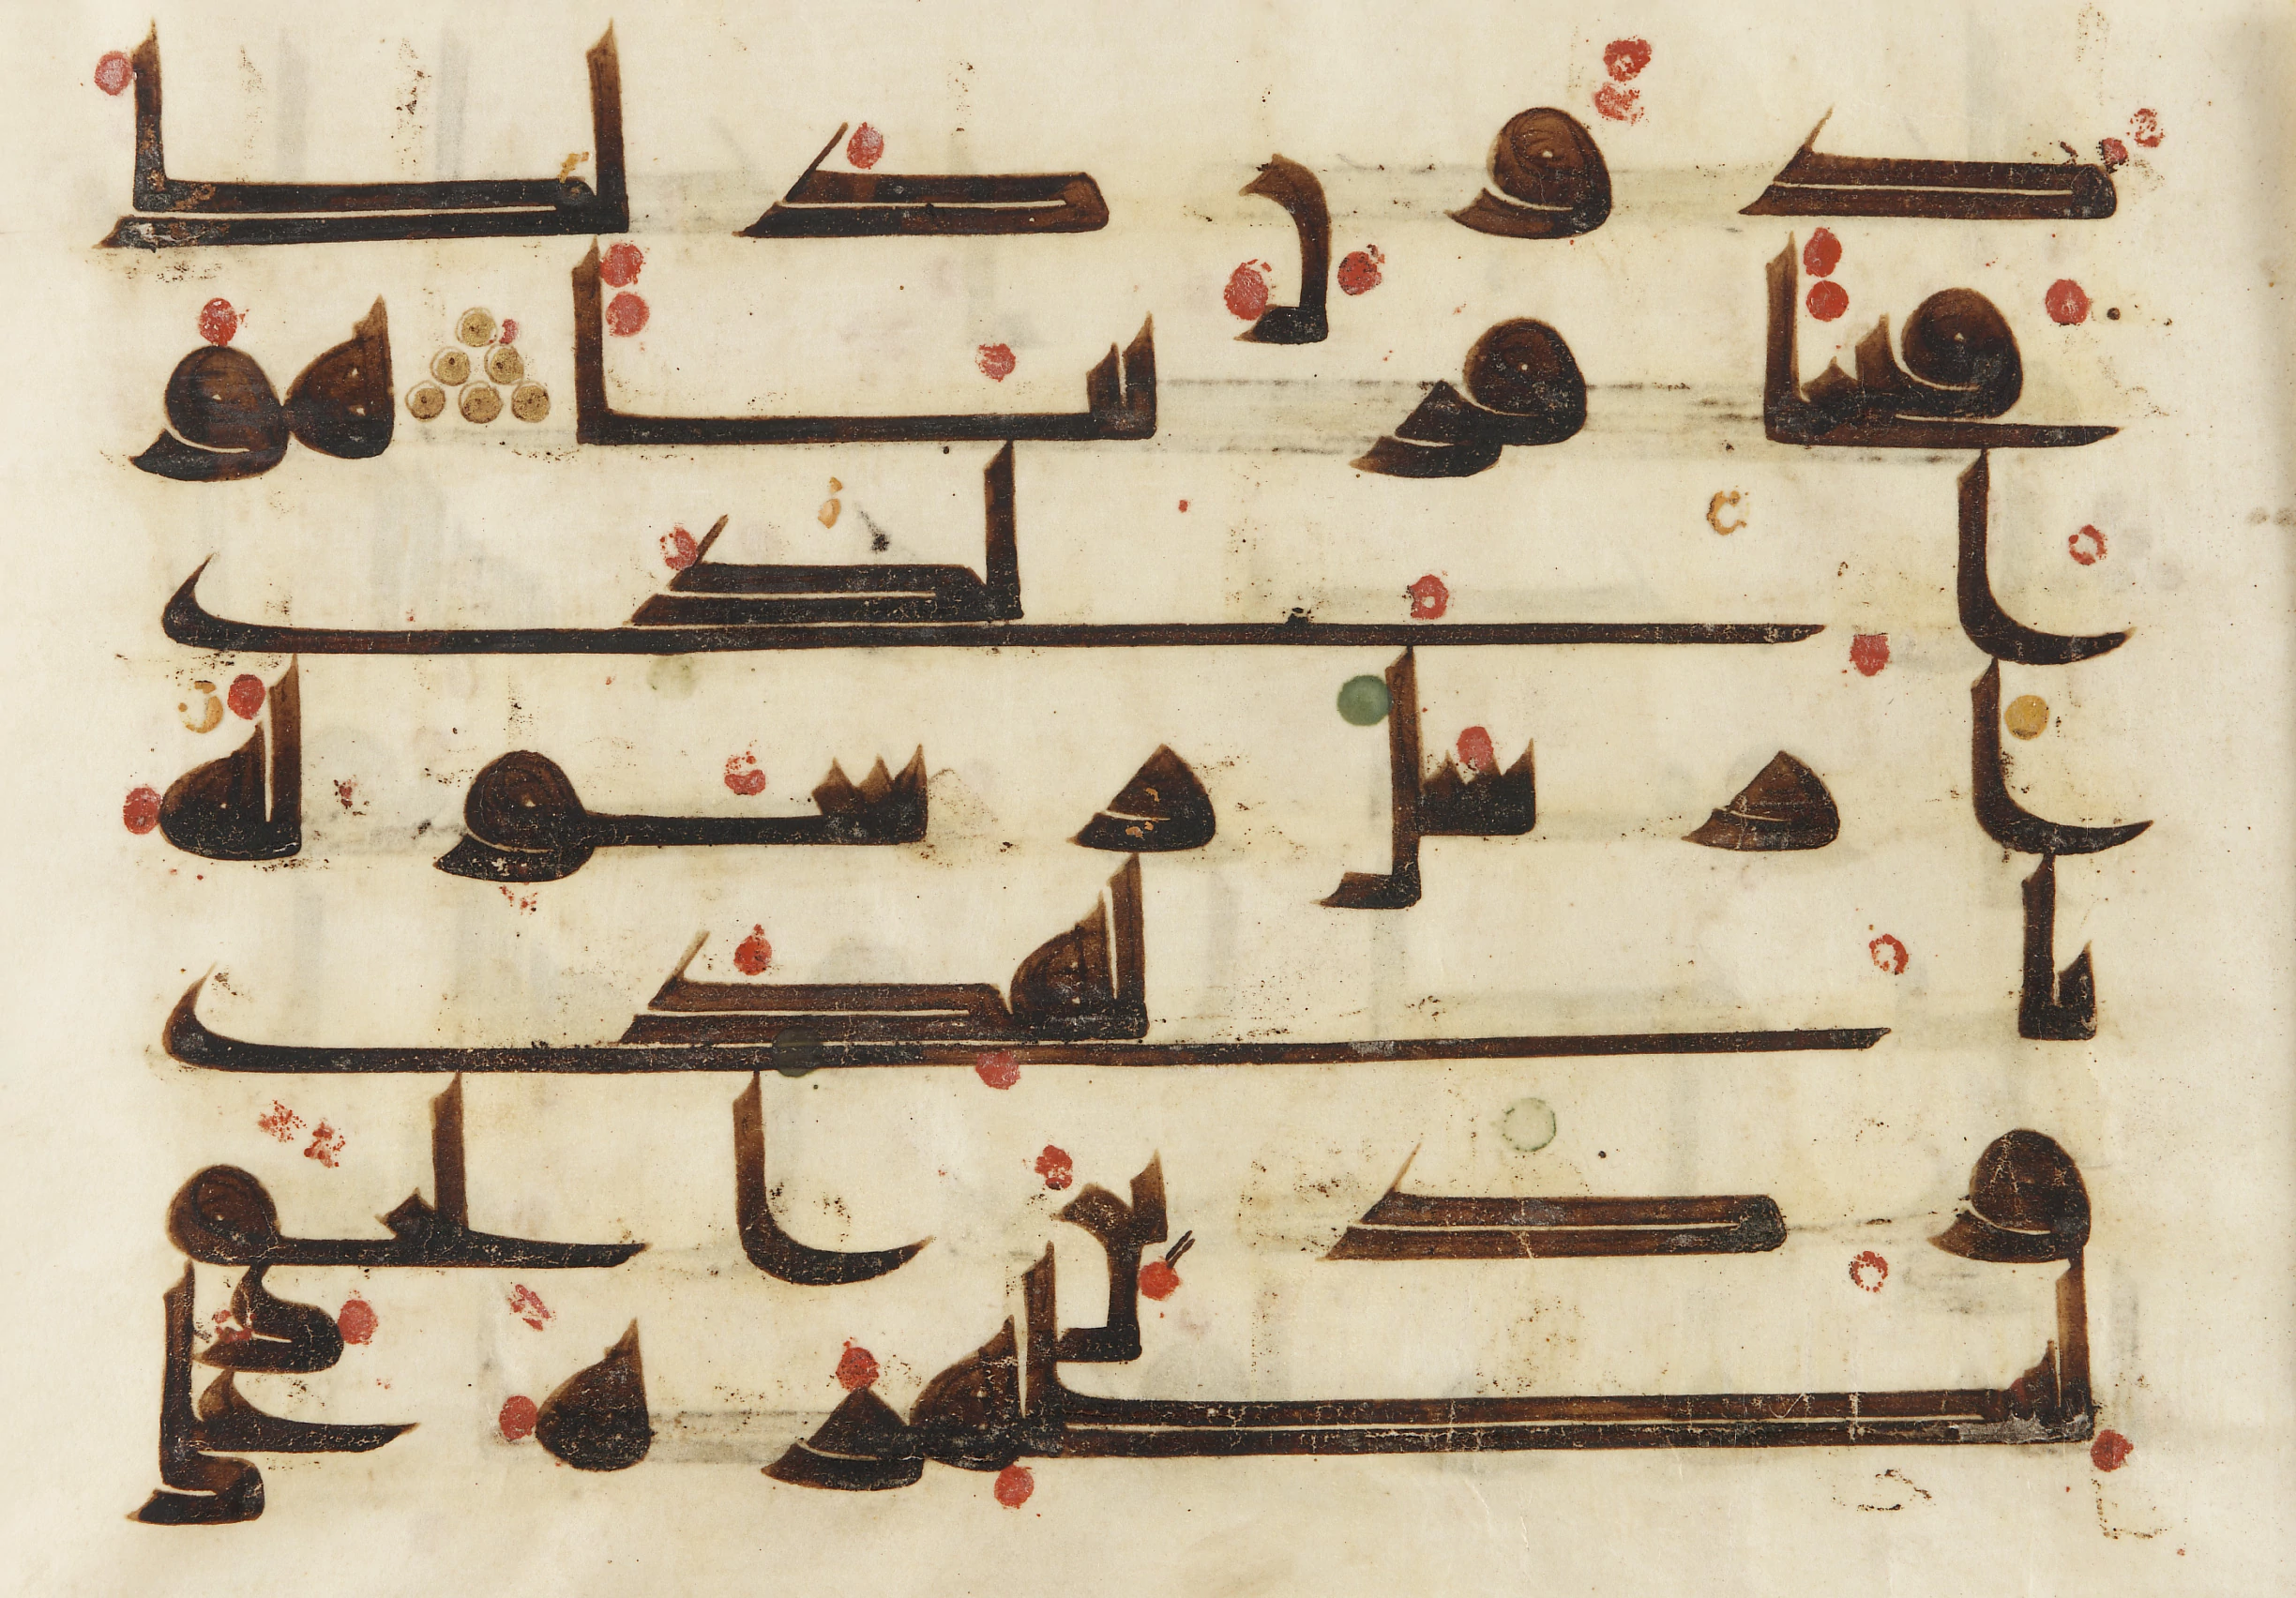 Kufic Script from a Qur'an, Islamic Dynastic Art